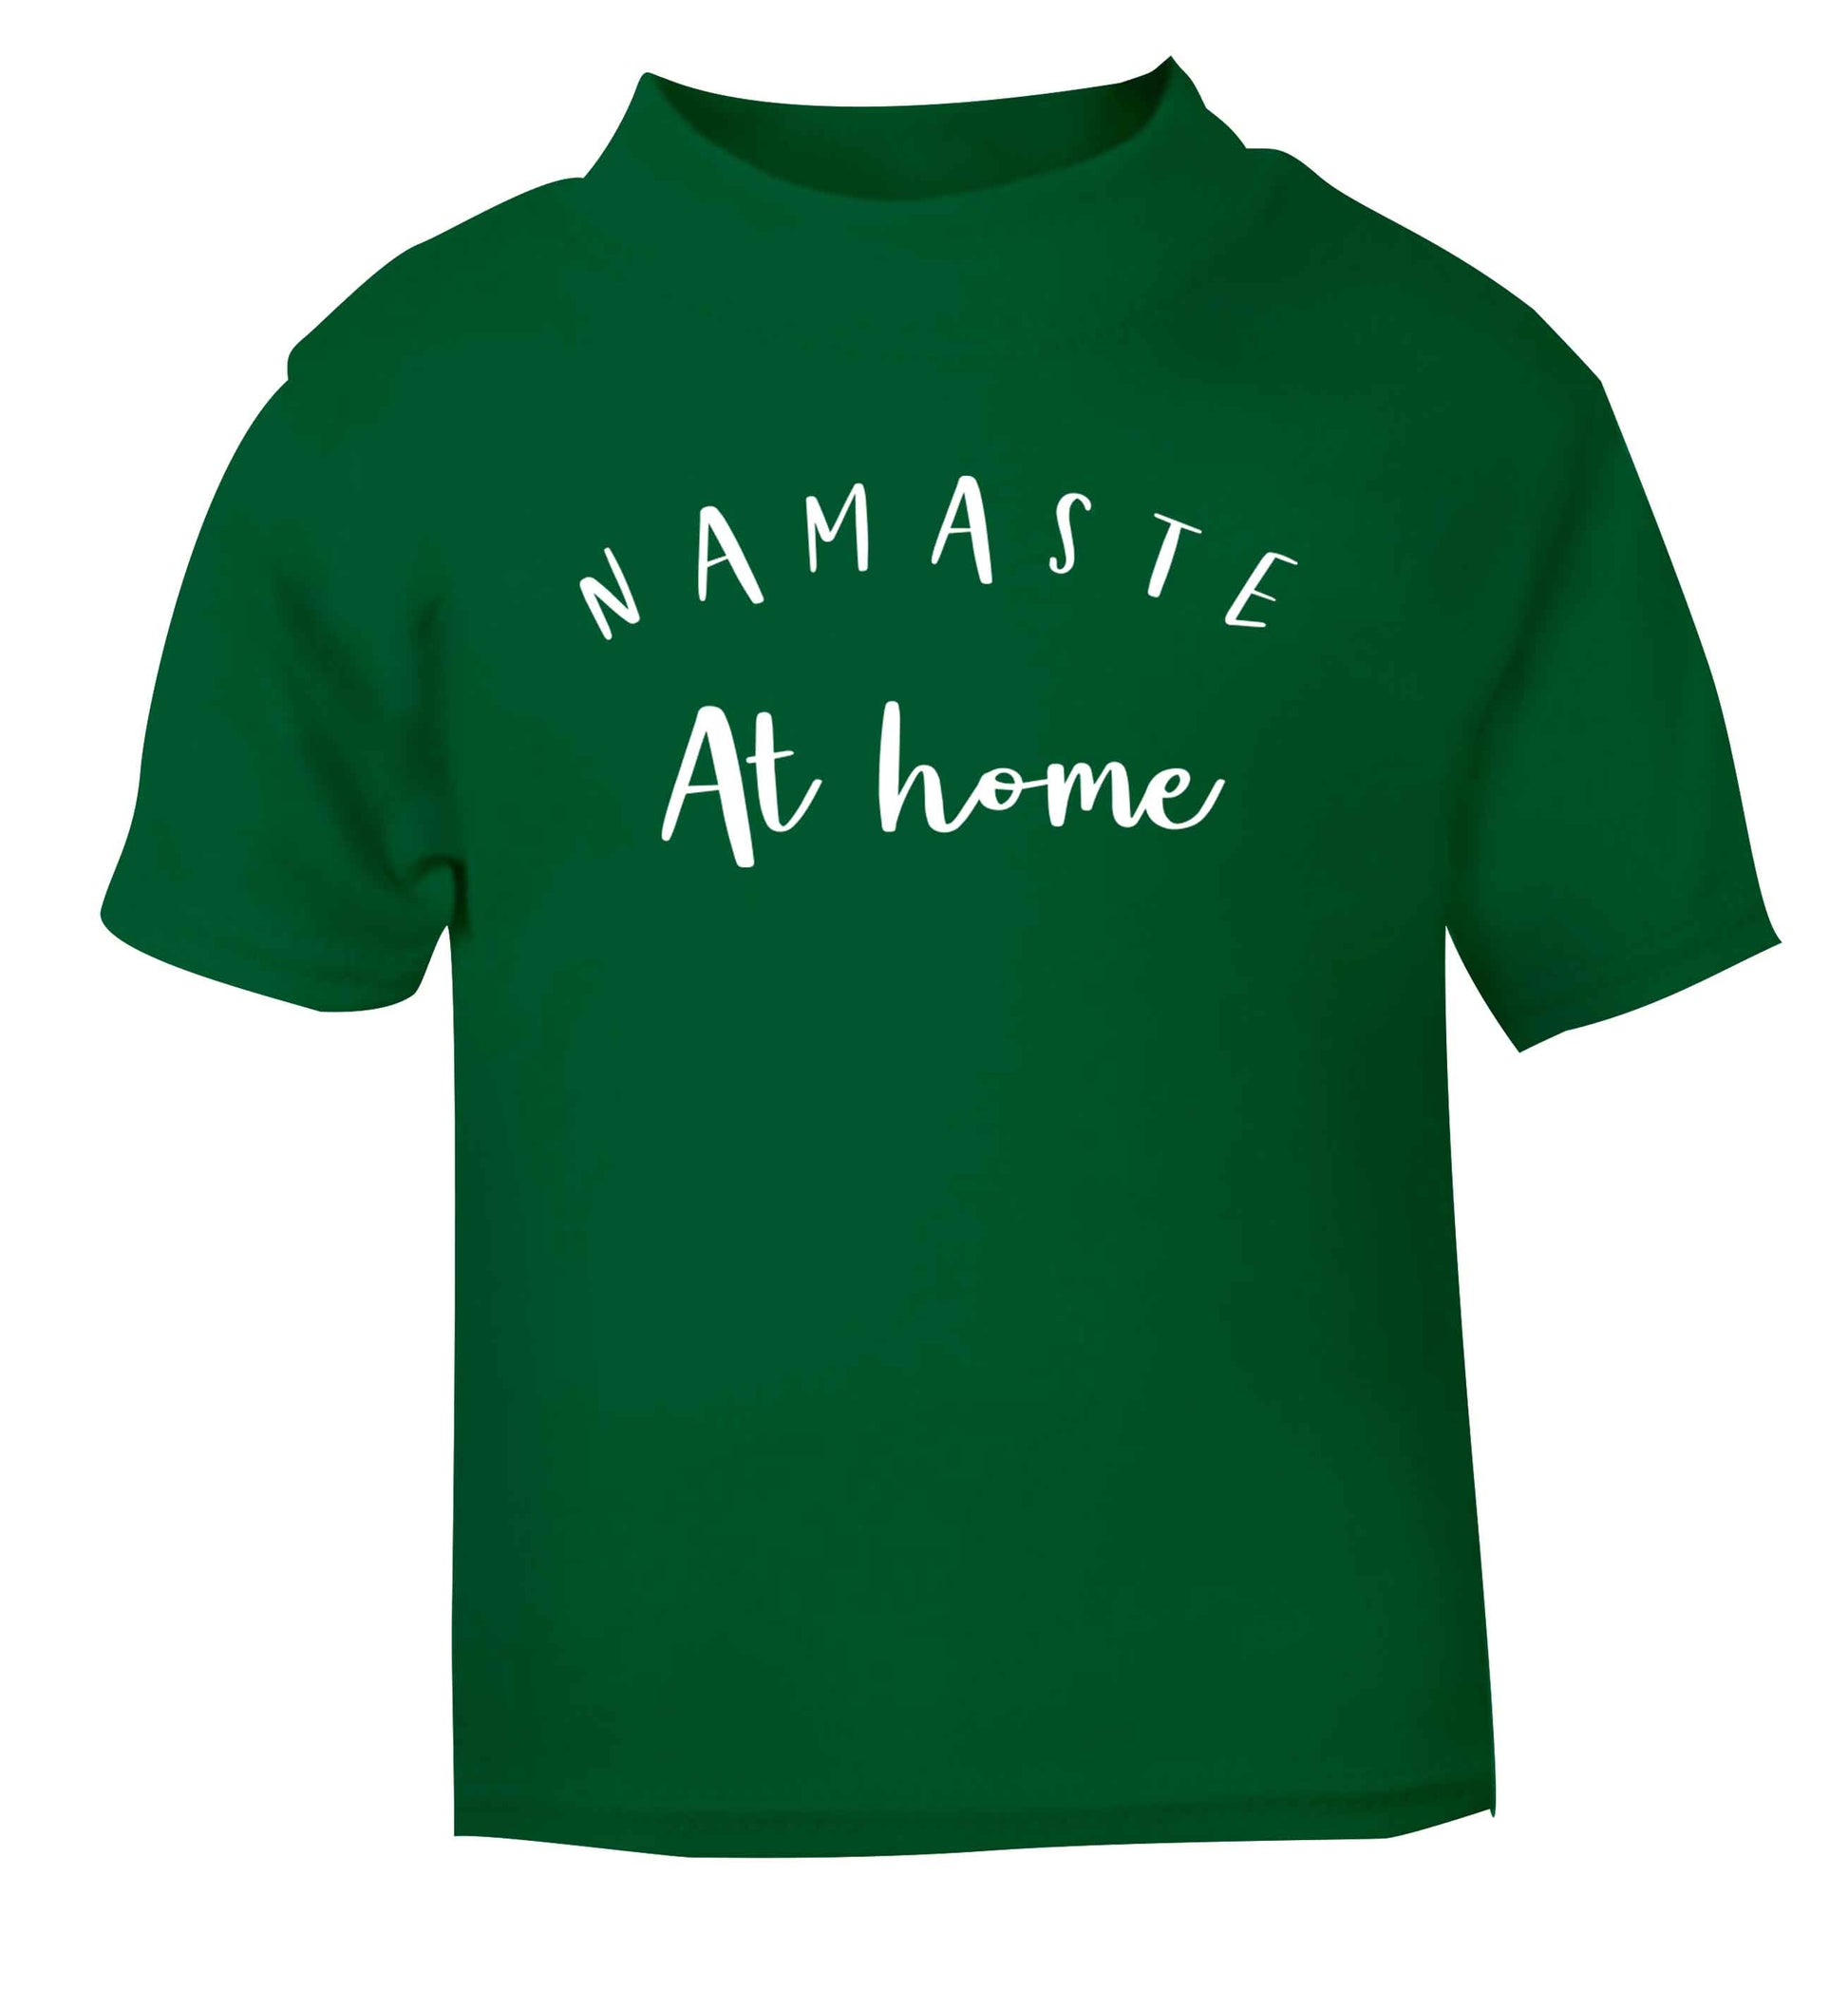 Namaste at home green Baby Toddler Tshirt 2 Years